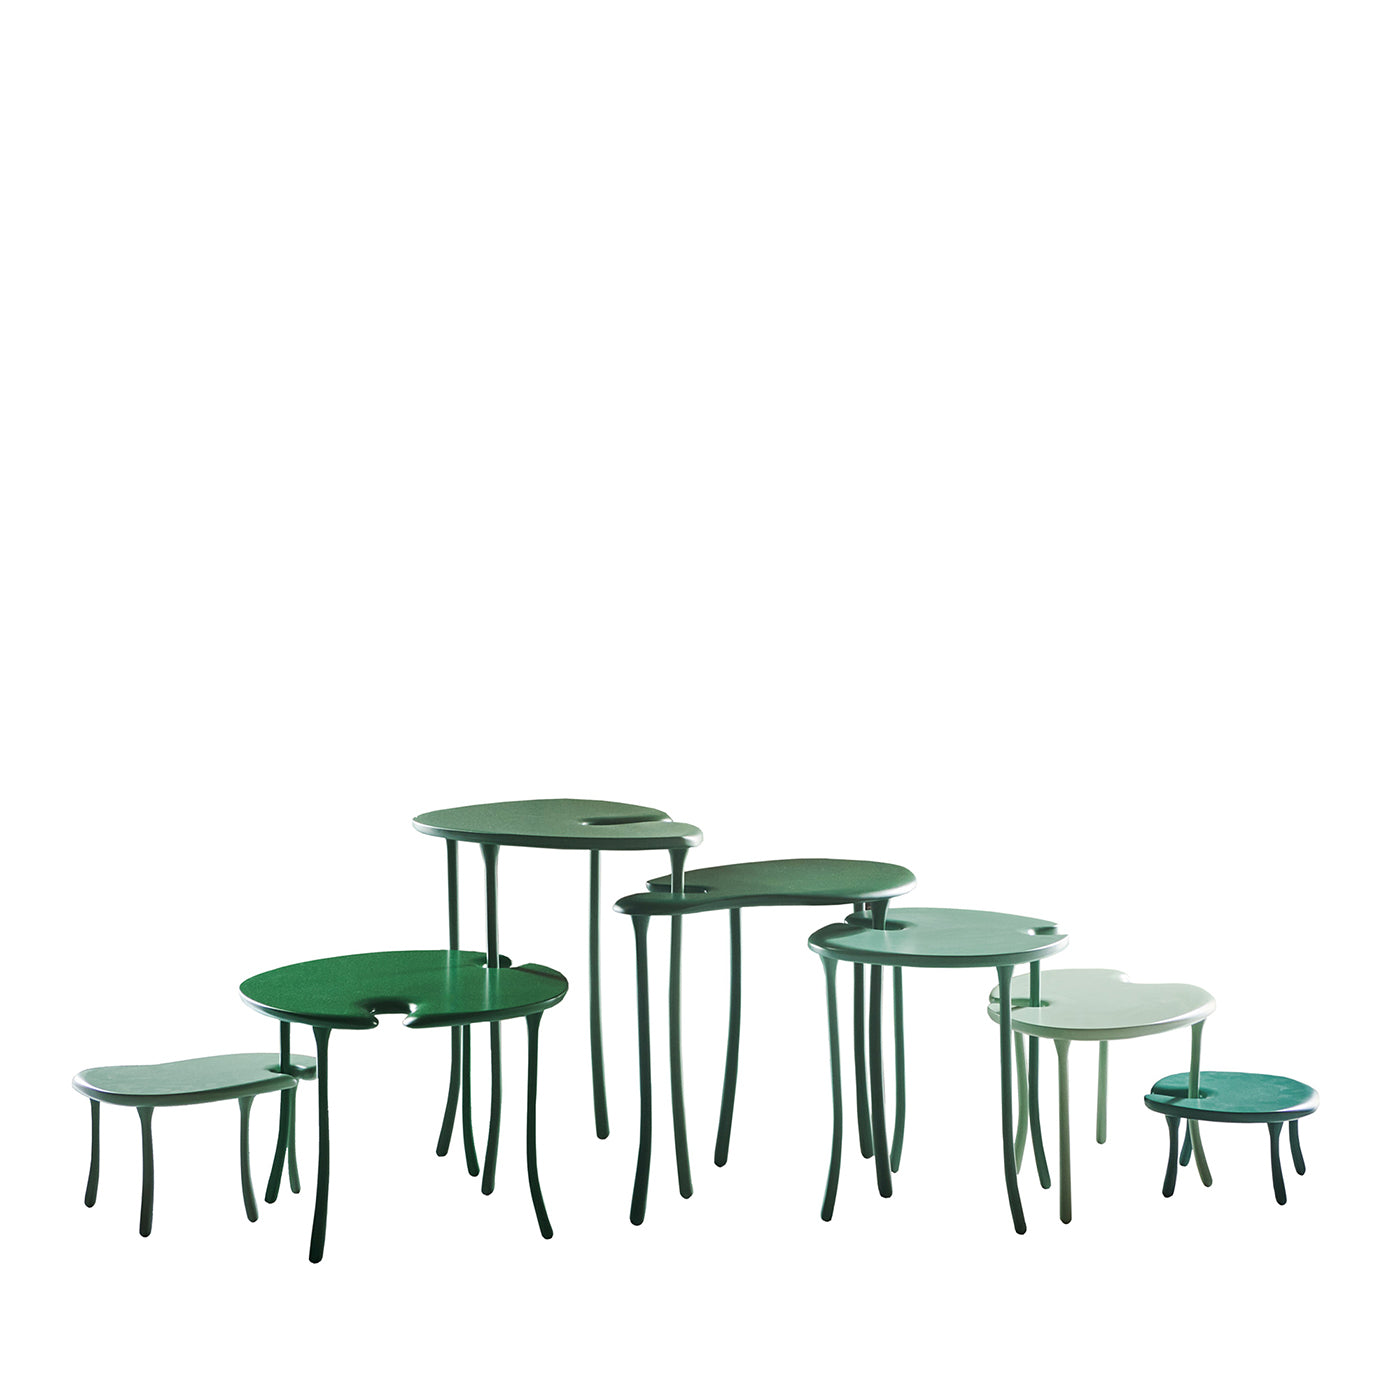 Tavo B 7-Piece Green Modular Set of Tables Limited Edition by Giuliano-Fukuda - Main view